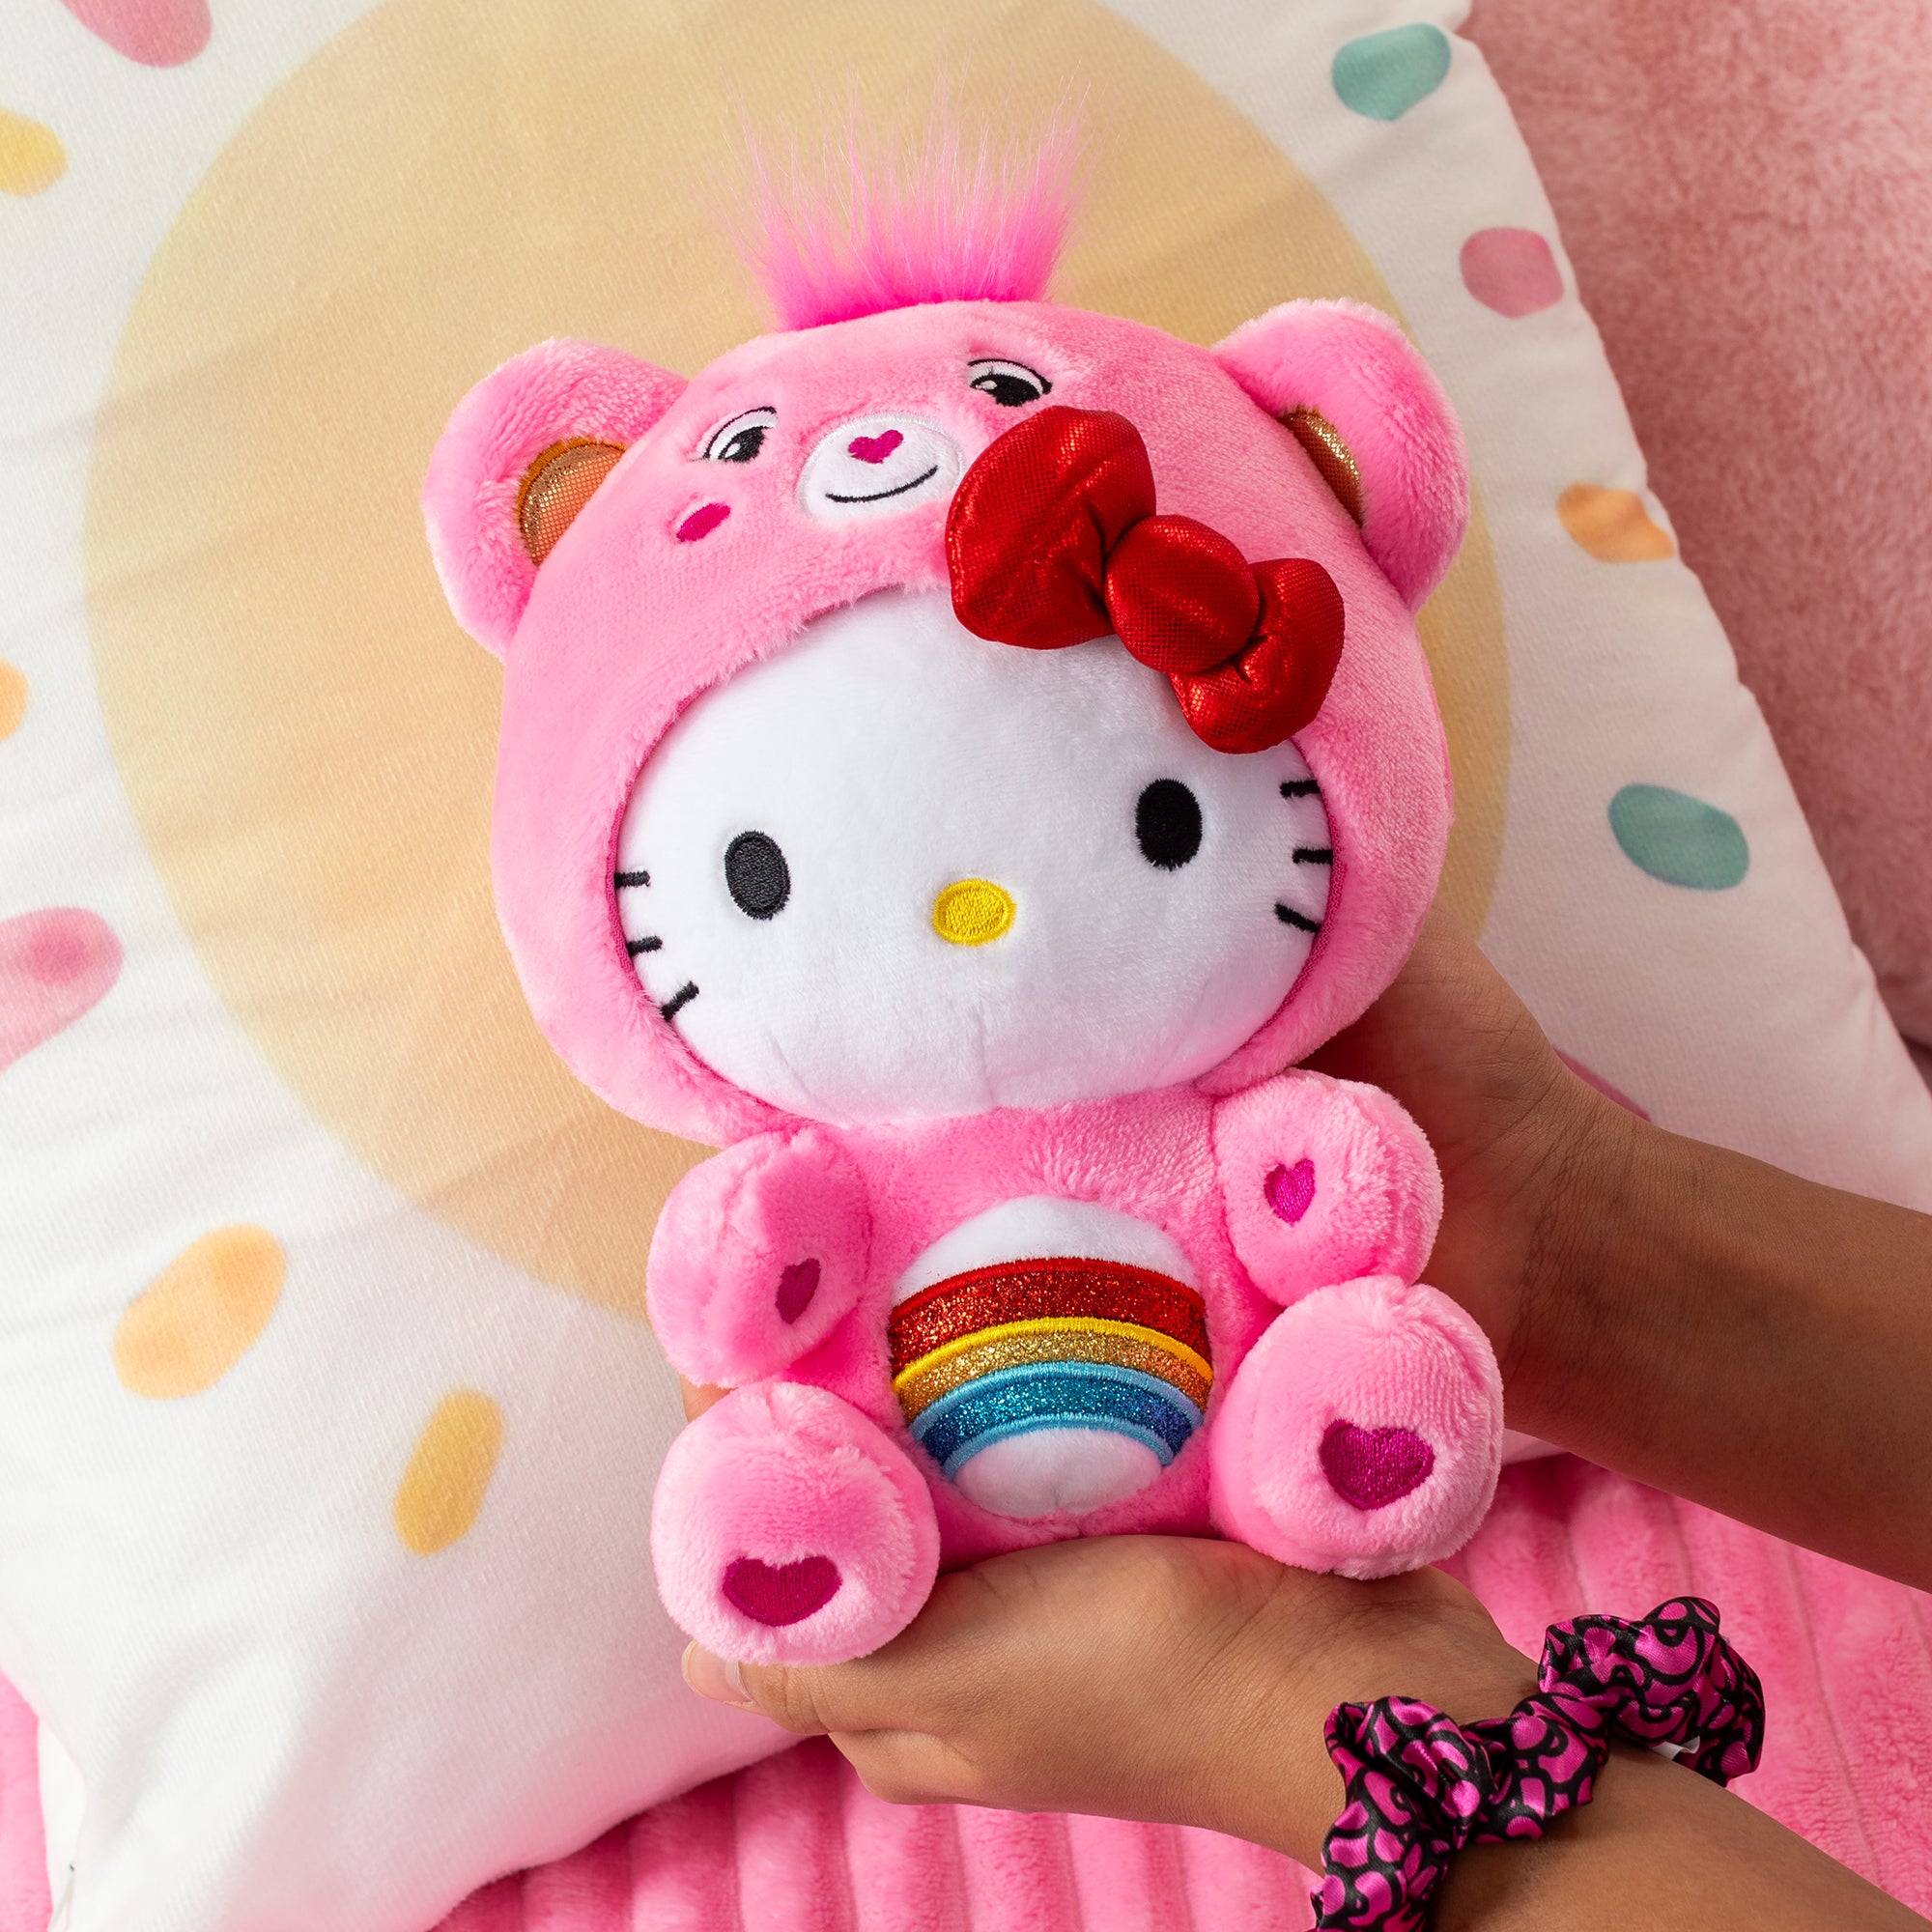 Hello Kitty x Care Bears 10"Plush (Cheer Bear) Plush Basic Fun Inc   